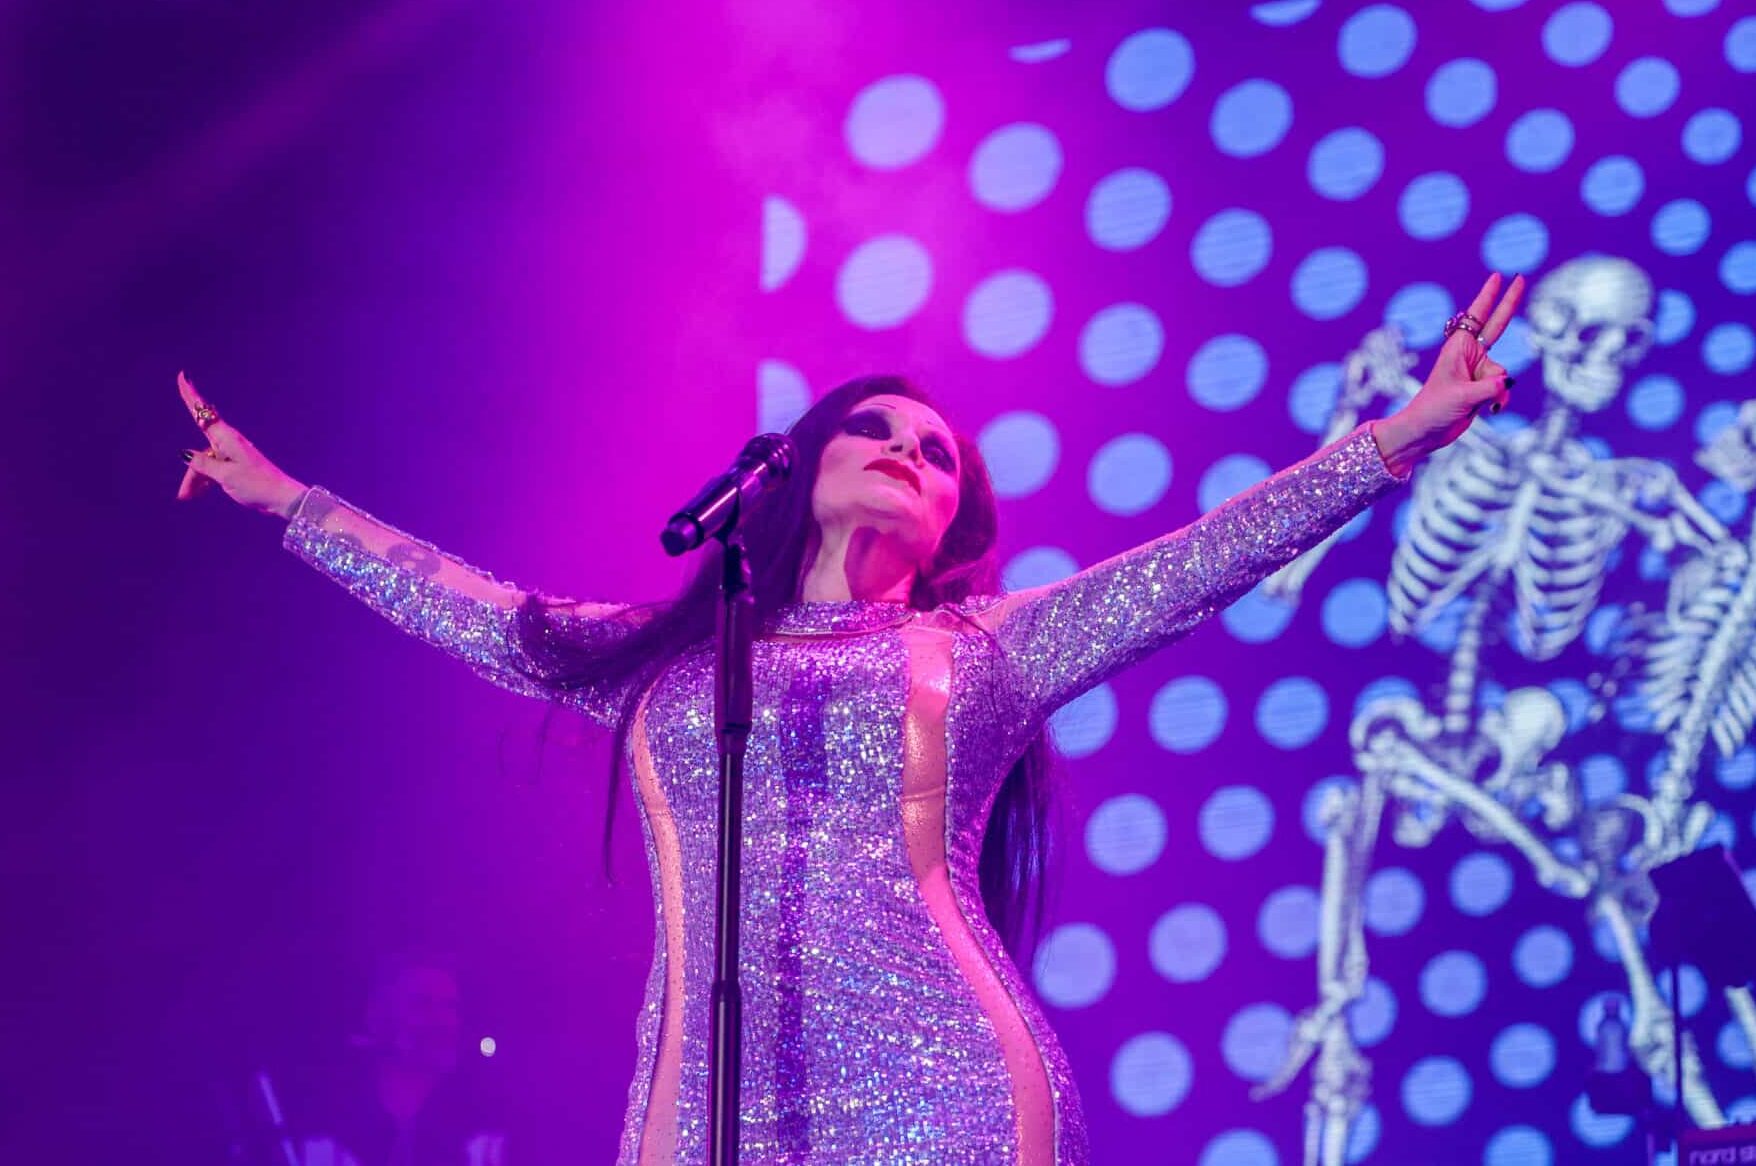 Alaska, cantante del grupo musical Fangoria, actúa en el Festival Noches del Botánico 2022